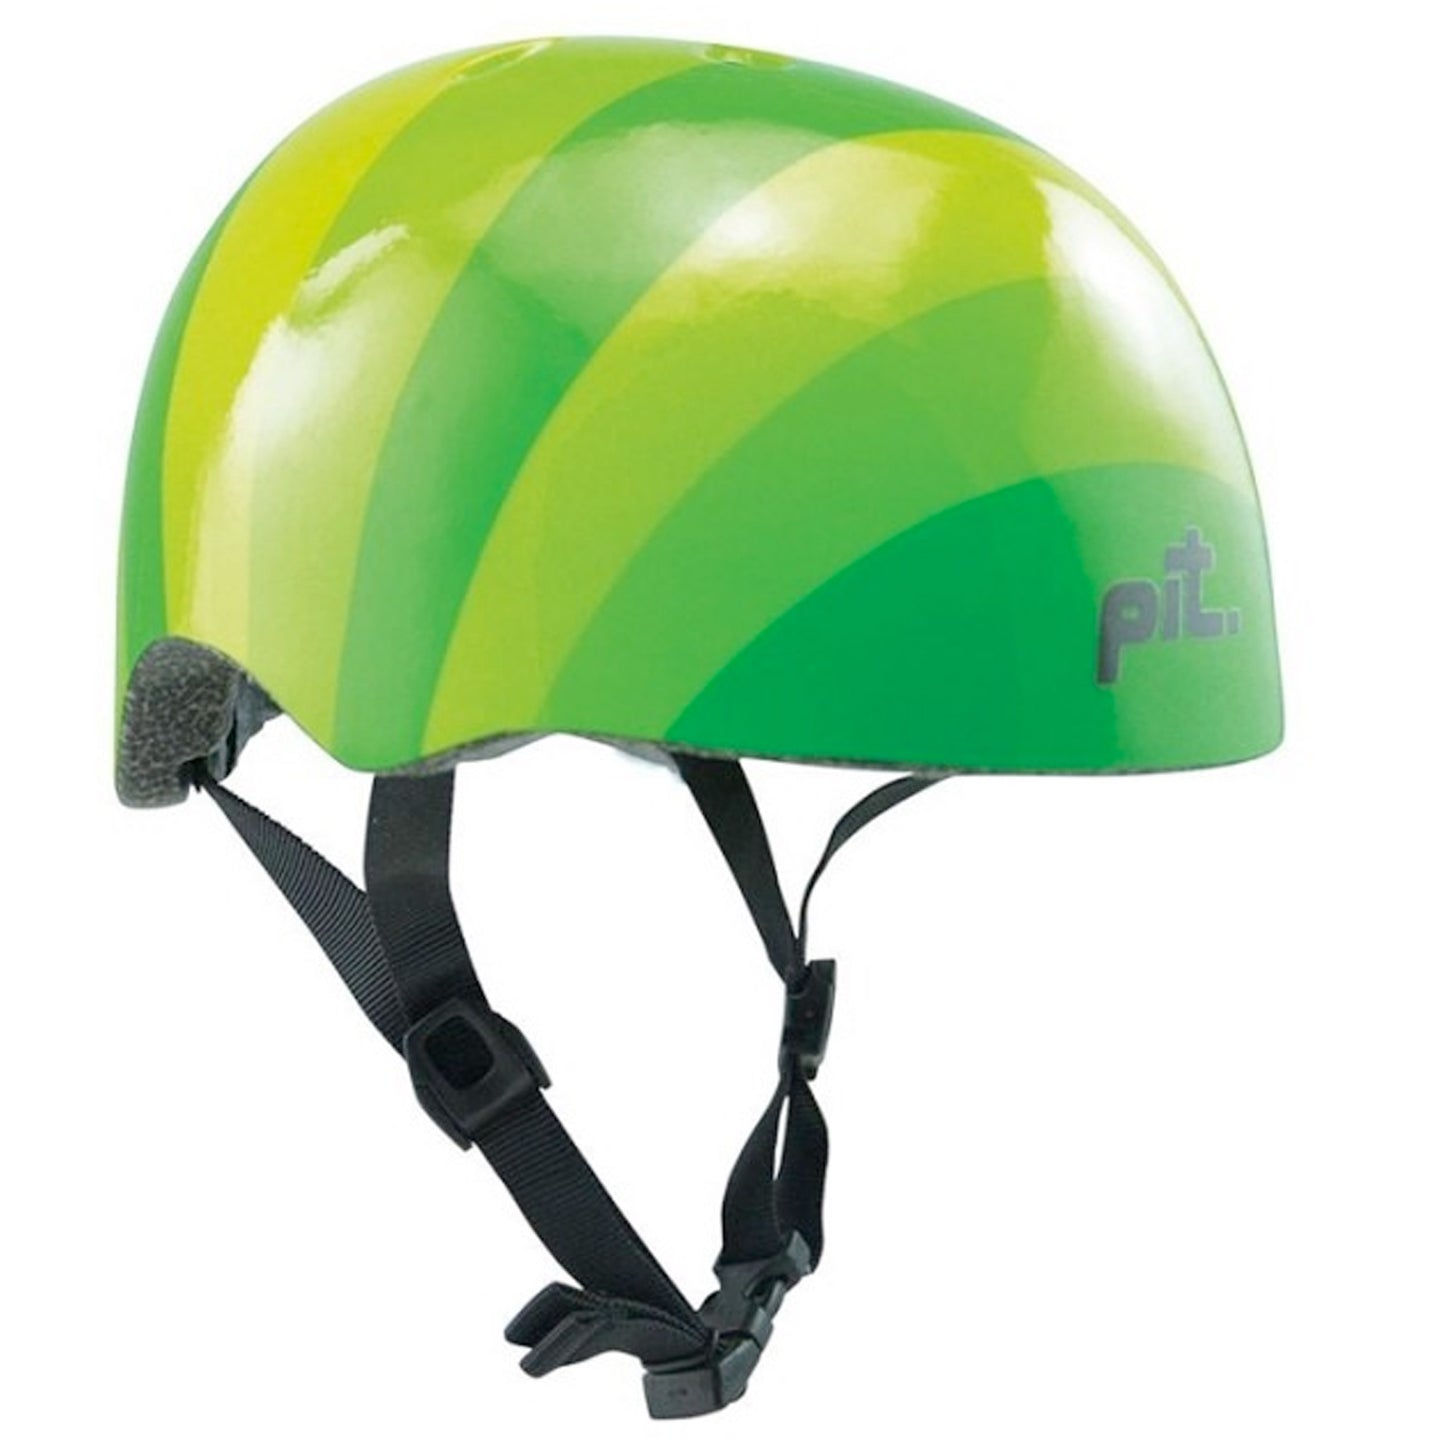 The Pit Kids Bike and Skate Helmet, Green, X-Small buy online at Woolys Wheels